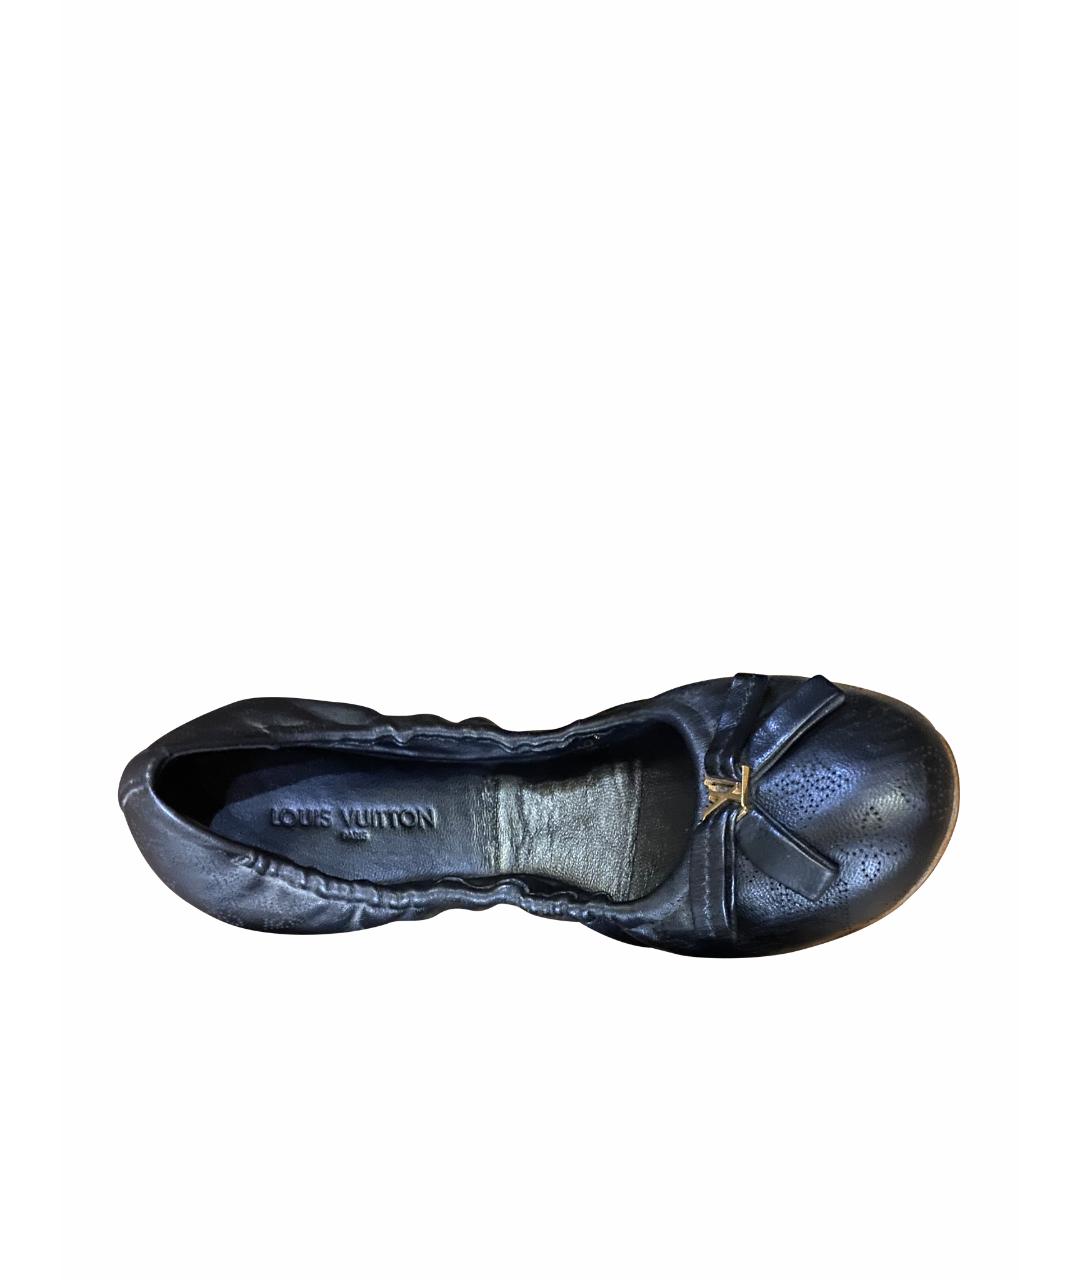 LOUIS VUITTON PRE-OWNED Черные кожаные балетки, фото 1